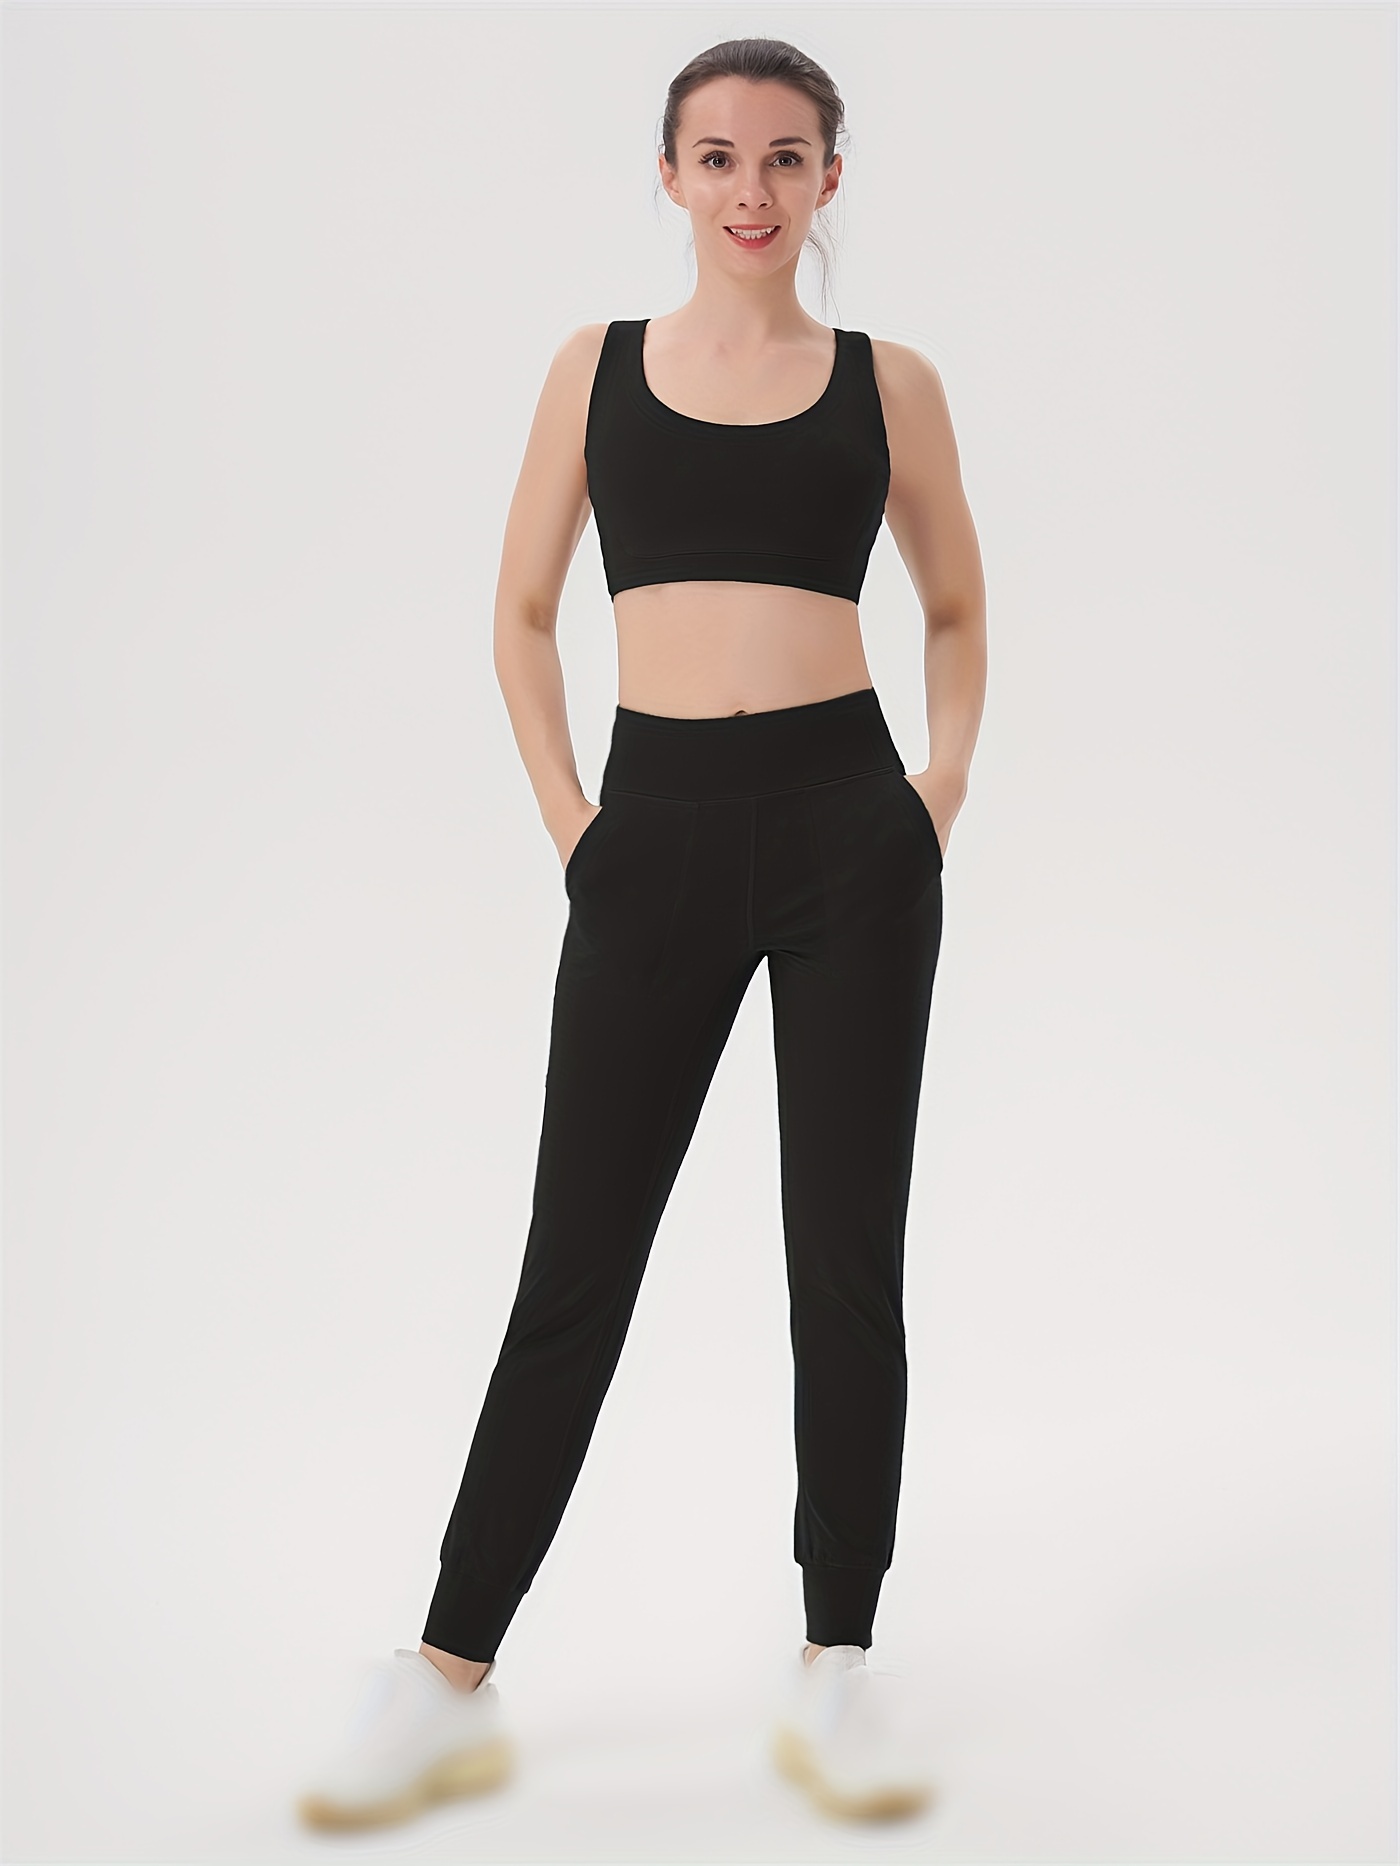 Pantalones De Yoga De Cintura Alta Para Mujer, Pantalones